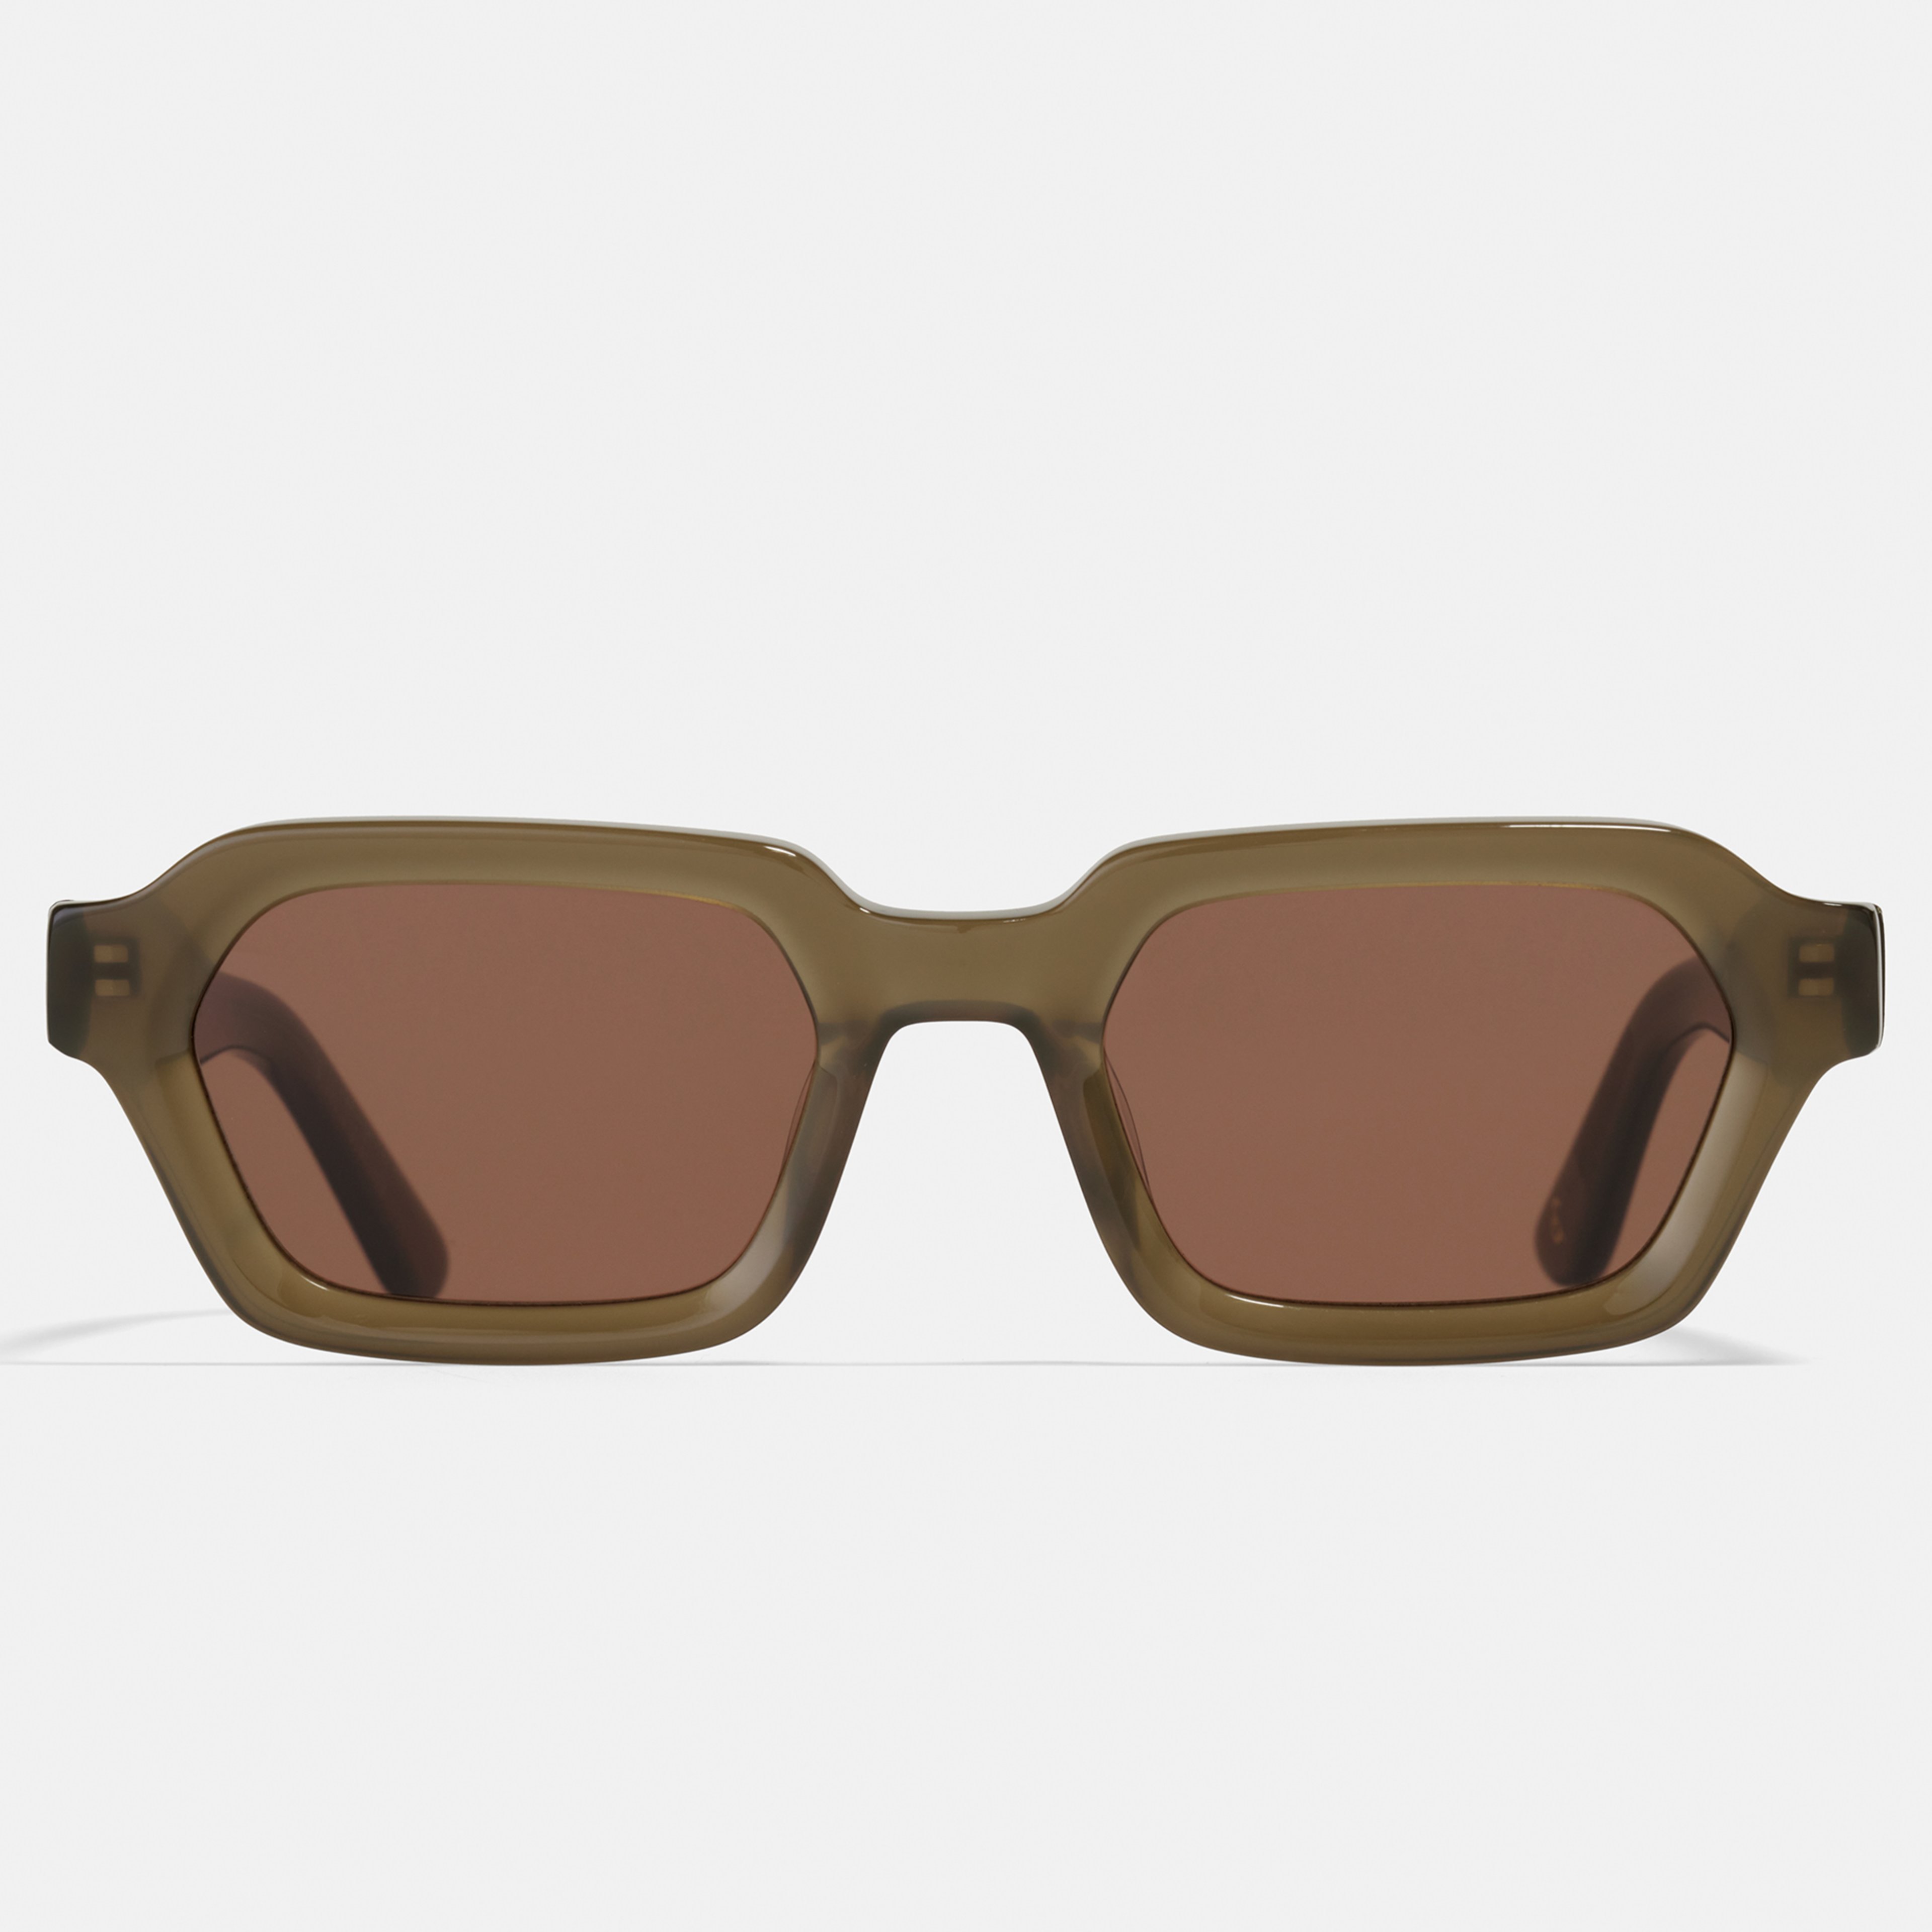 Ace & Tate Sunglasses | rectangle Renew bio acetate in Green